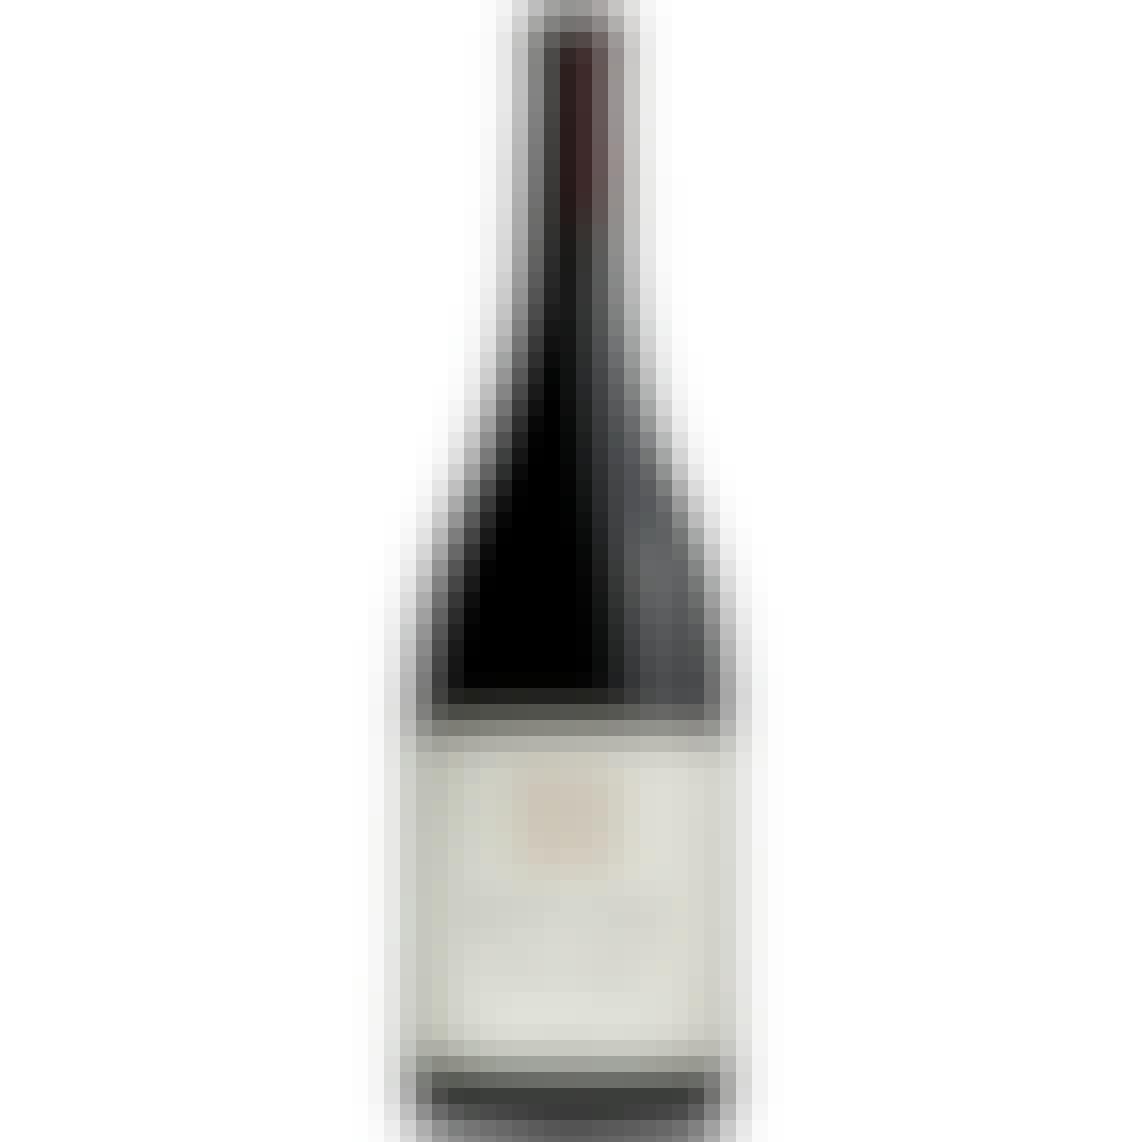 Block Nine Caiden's Vineyard Pinot Noir 750ml